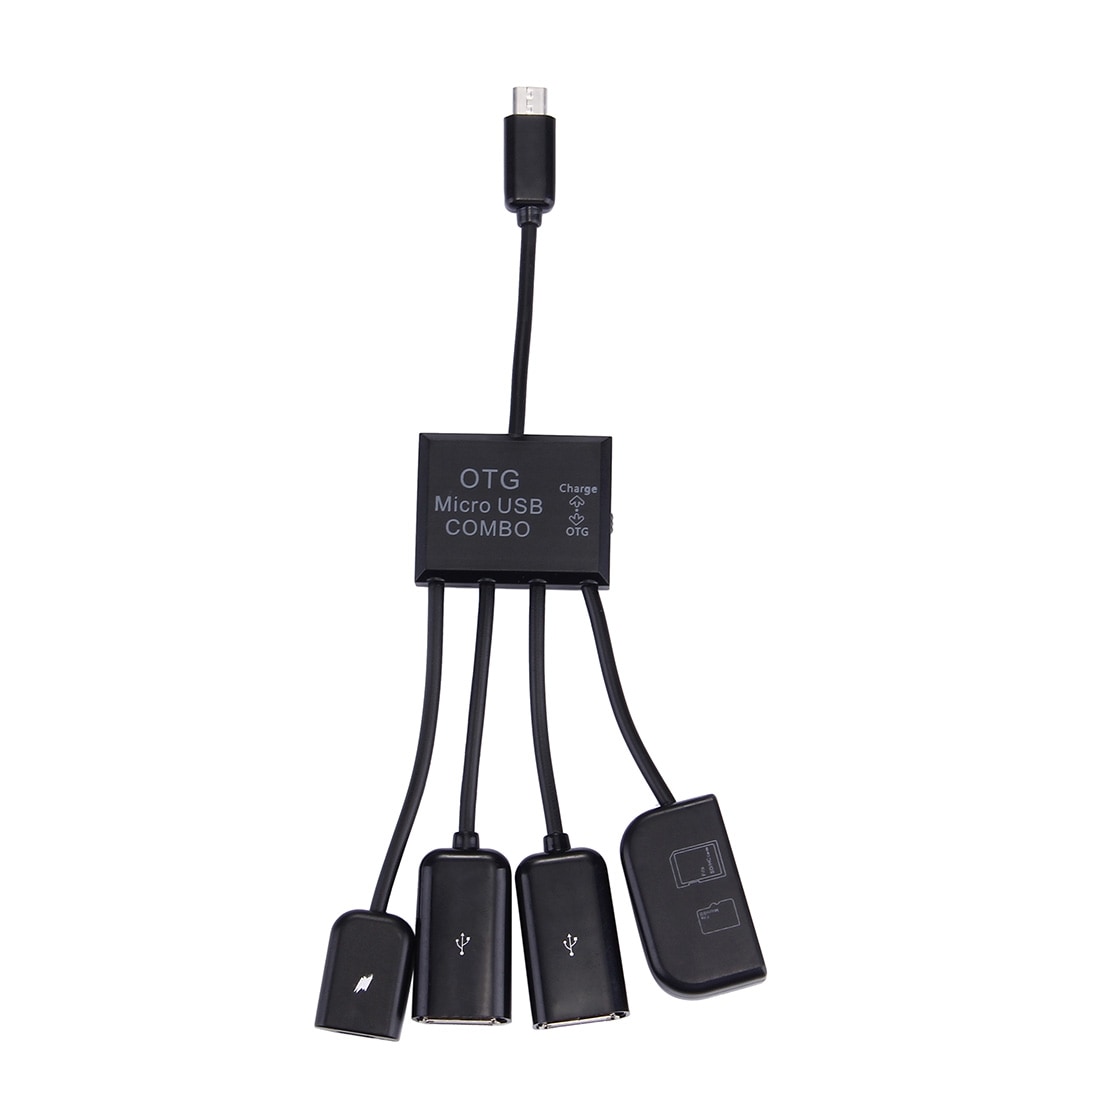 Usbhubb for mobiltelefon Micro USB OTG